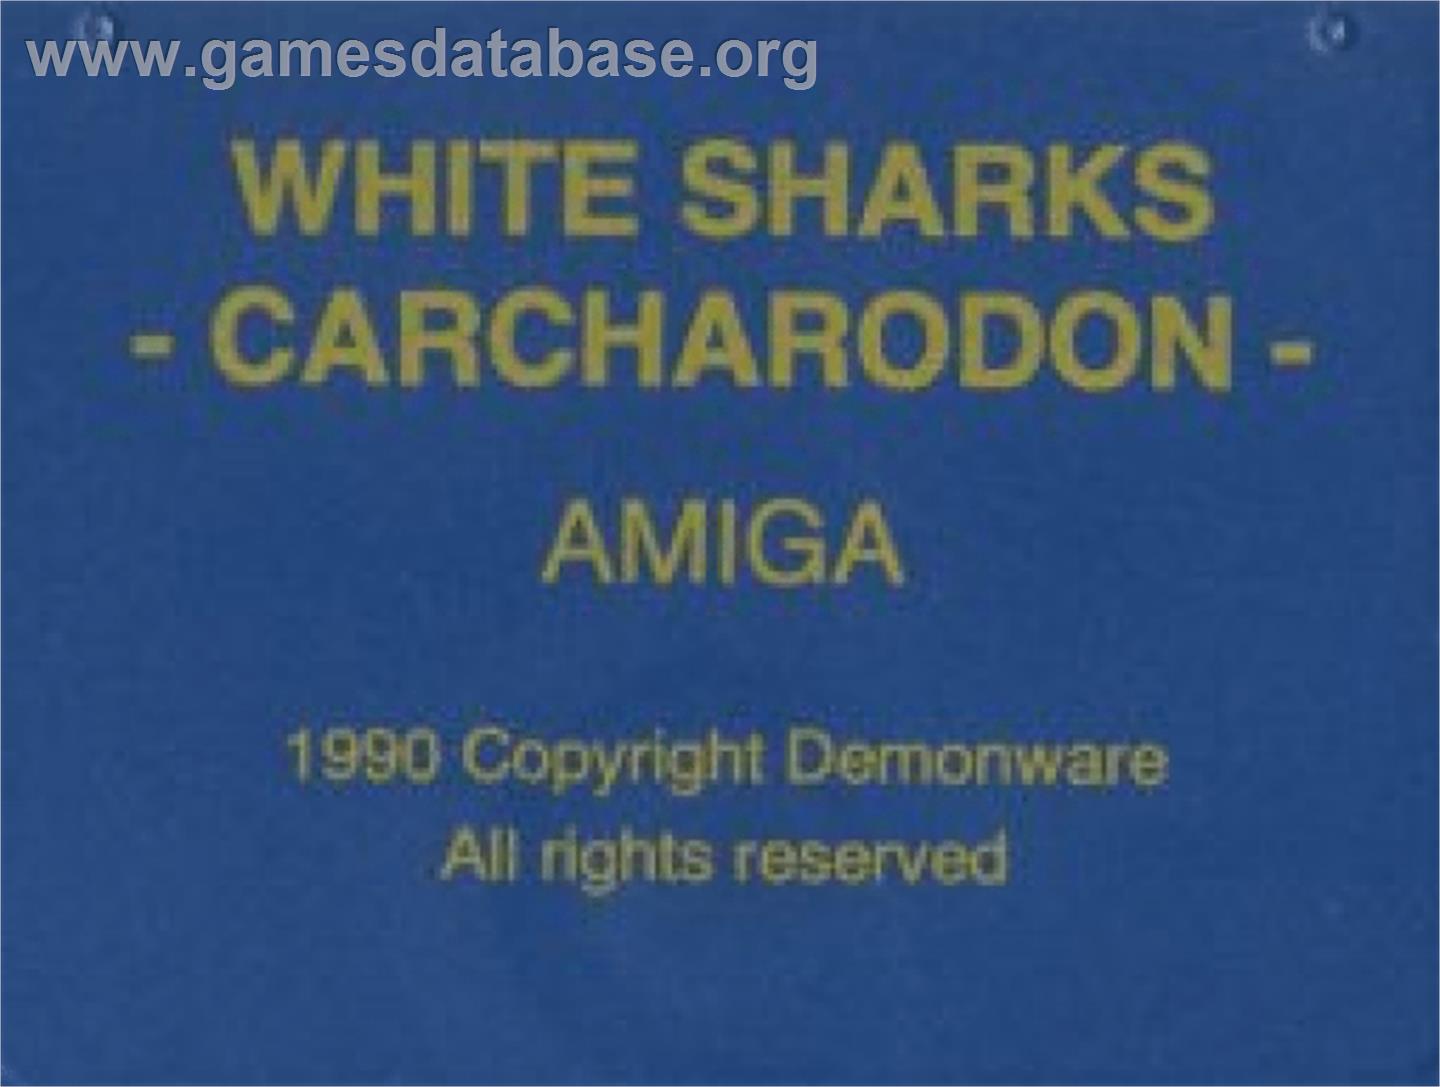 Carcharodon: White Sharks - Commodore Amiga - Artwork - Cartridge Top